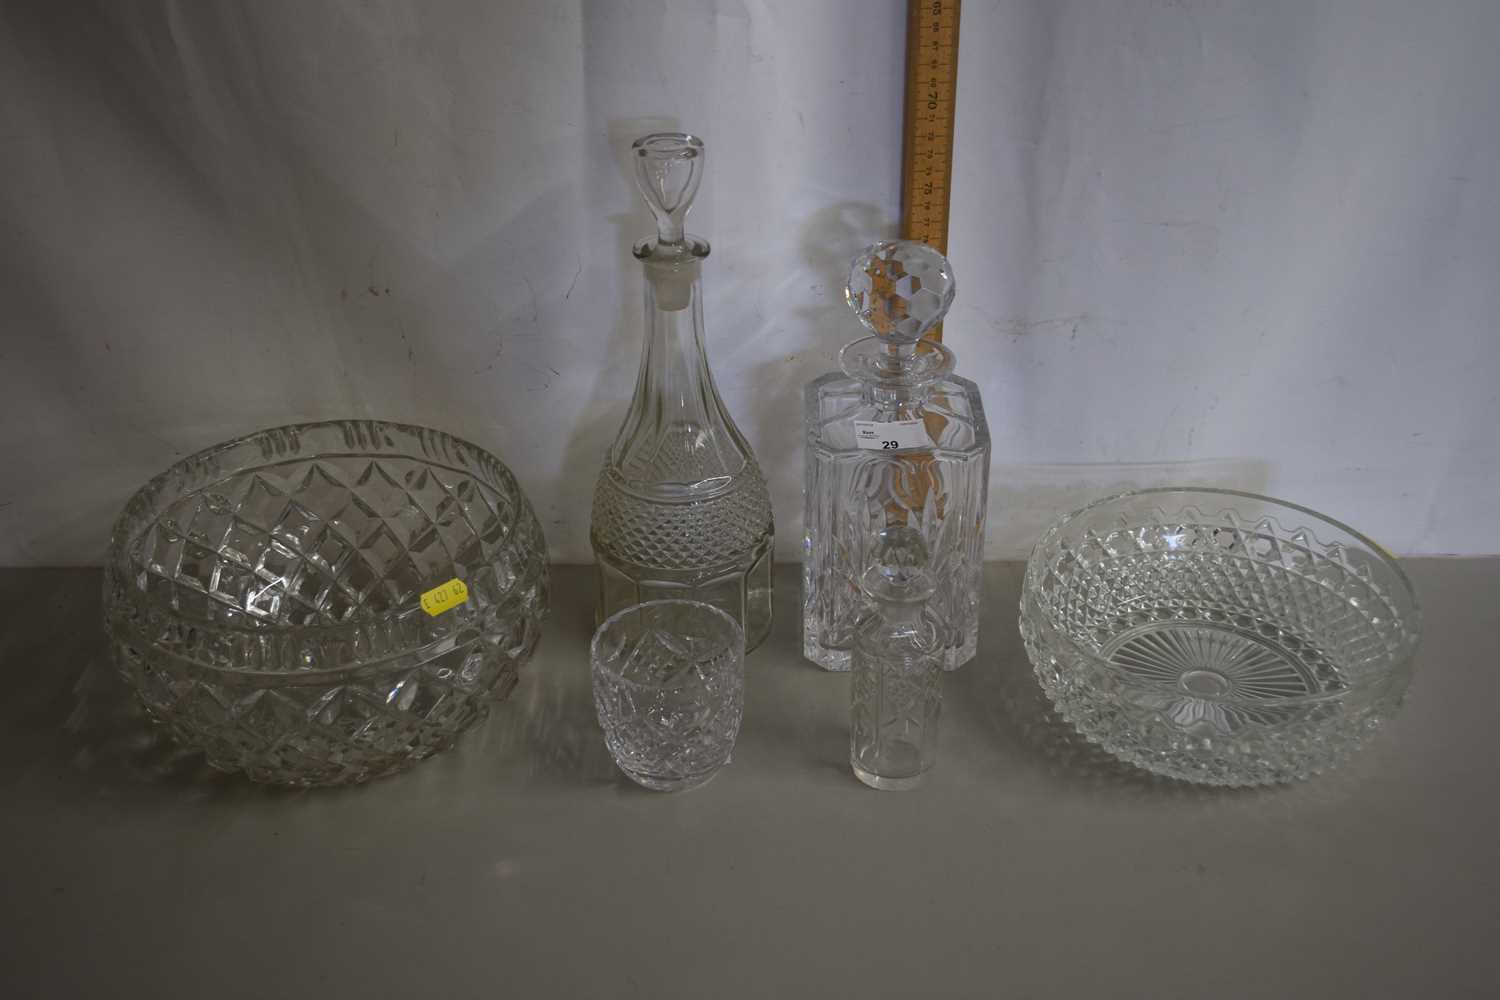 Lot 29 - Mixed Lot: Decanters, glass bowls etc